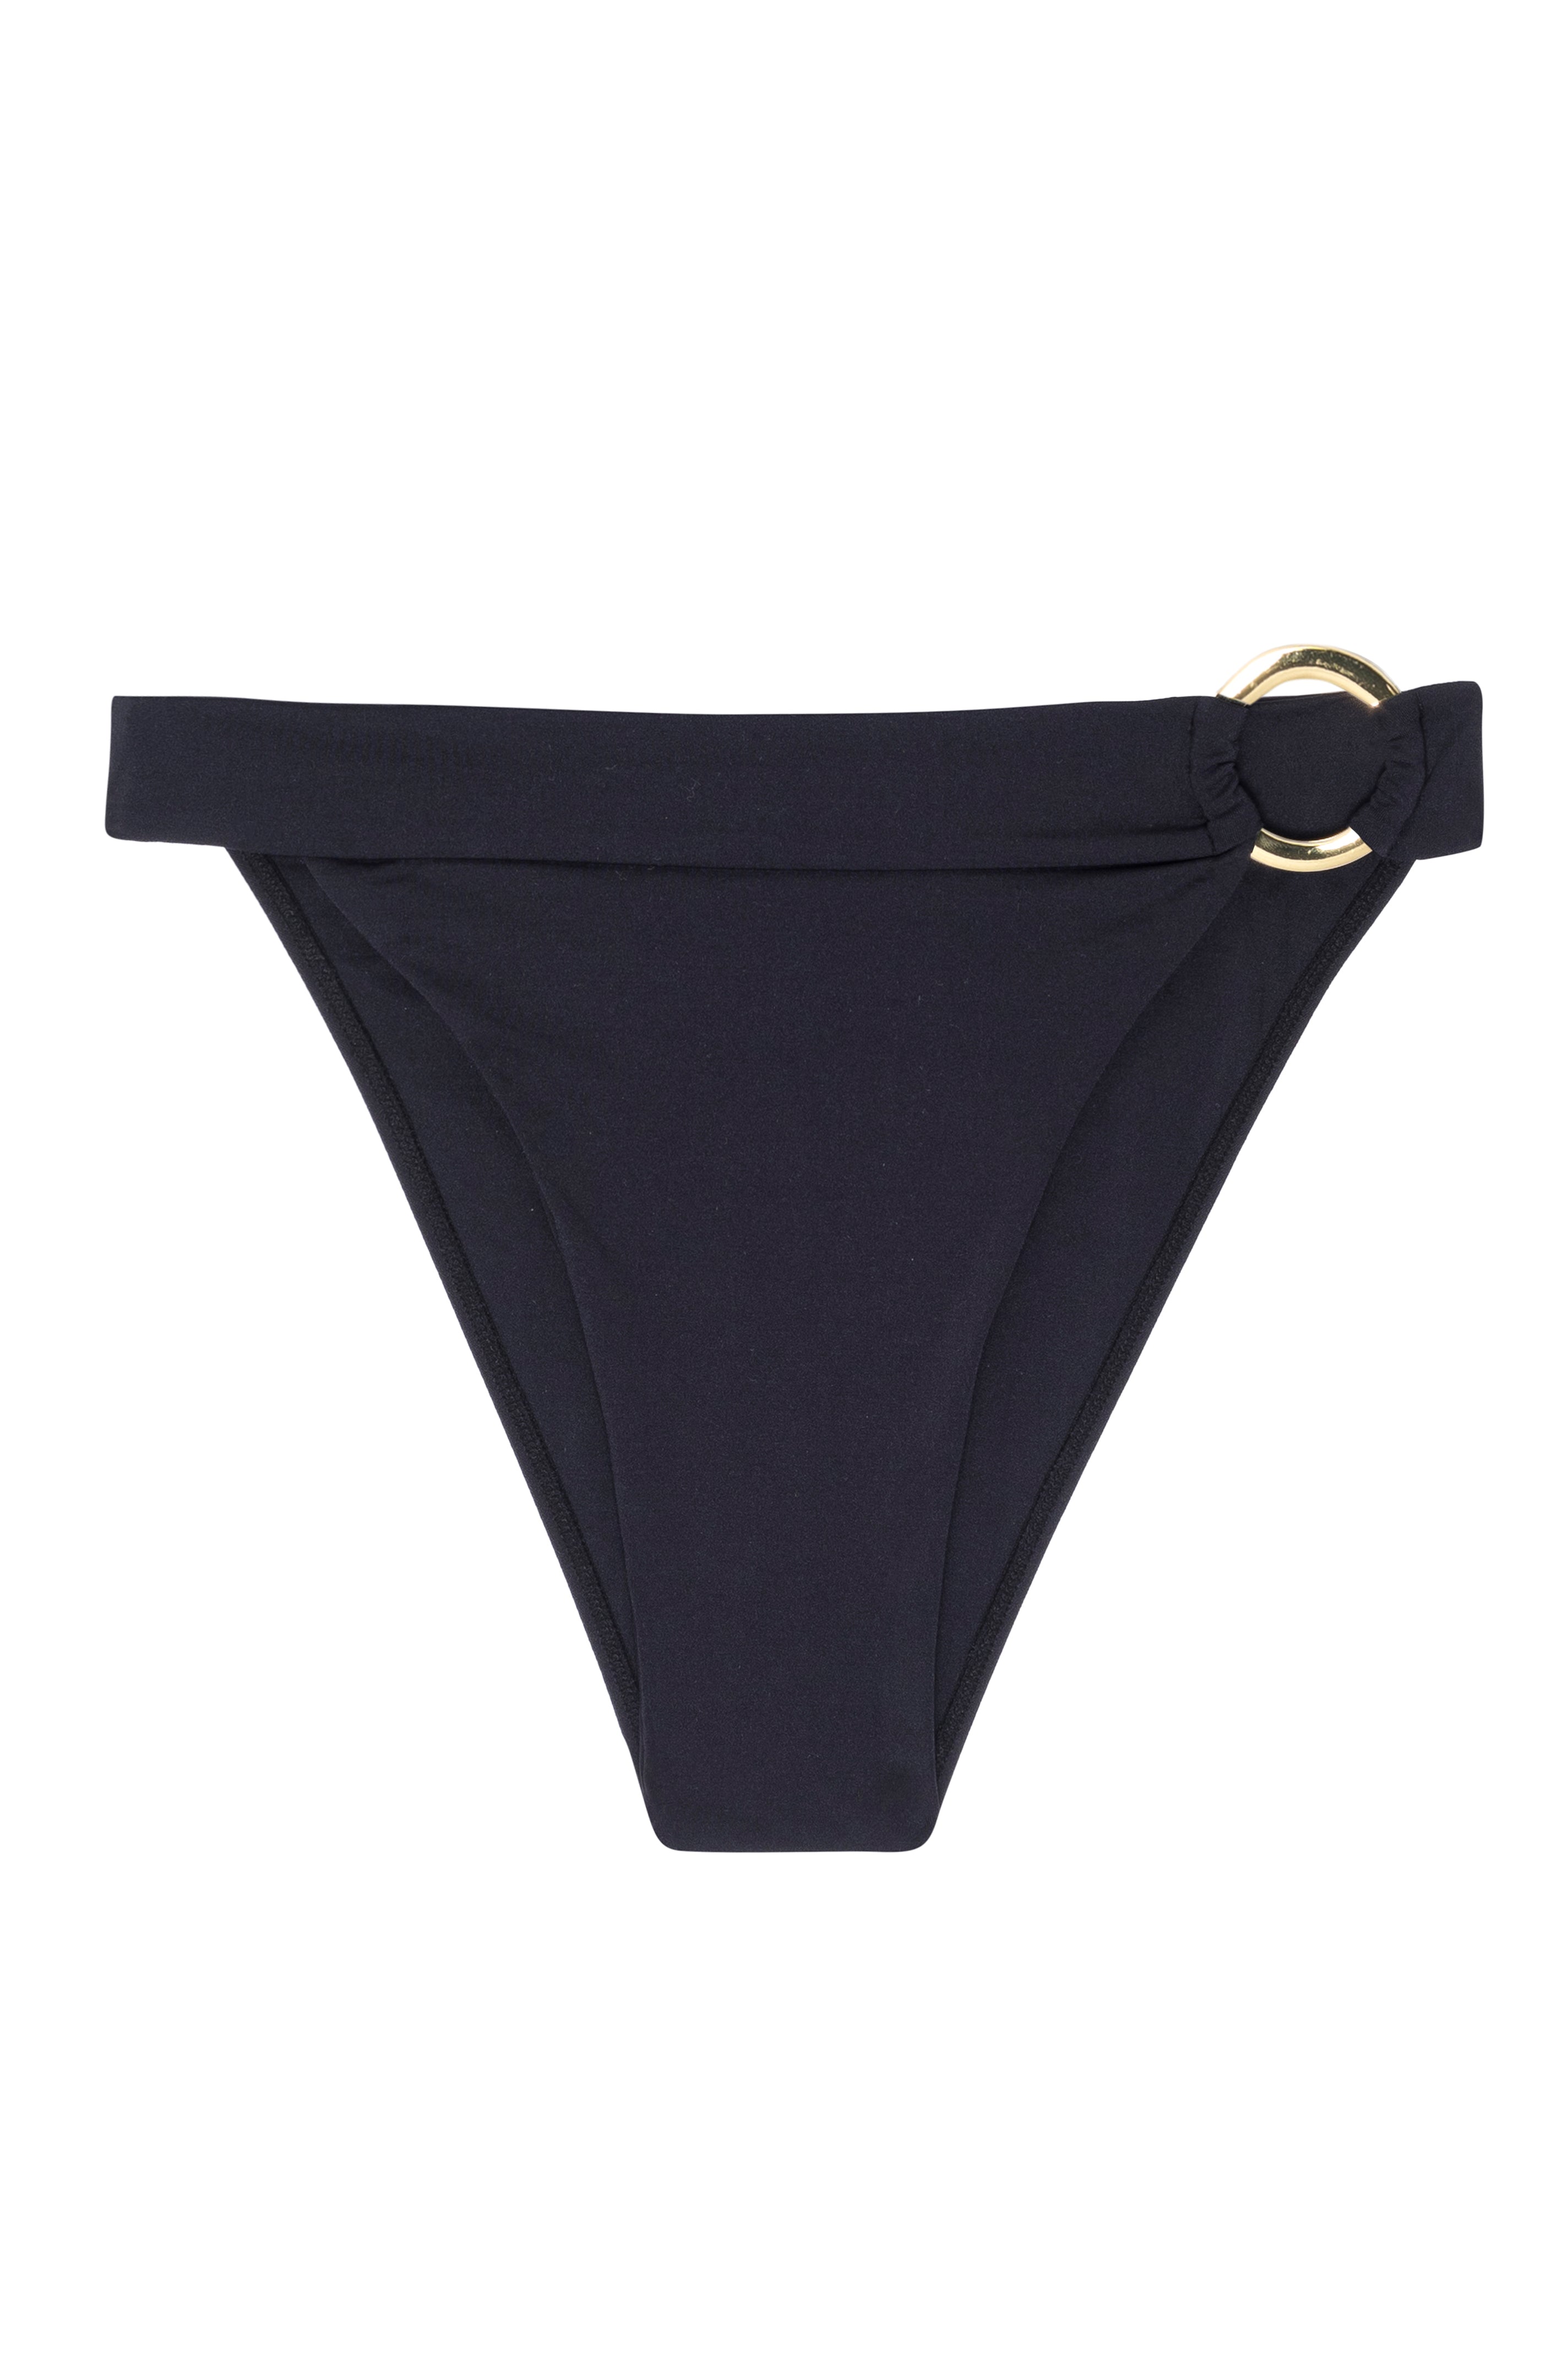 Antigua Bottom - Black – Monday Swimwear